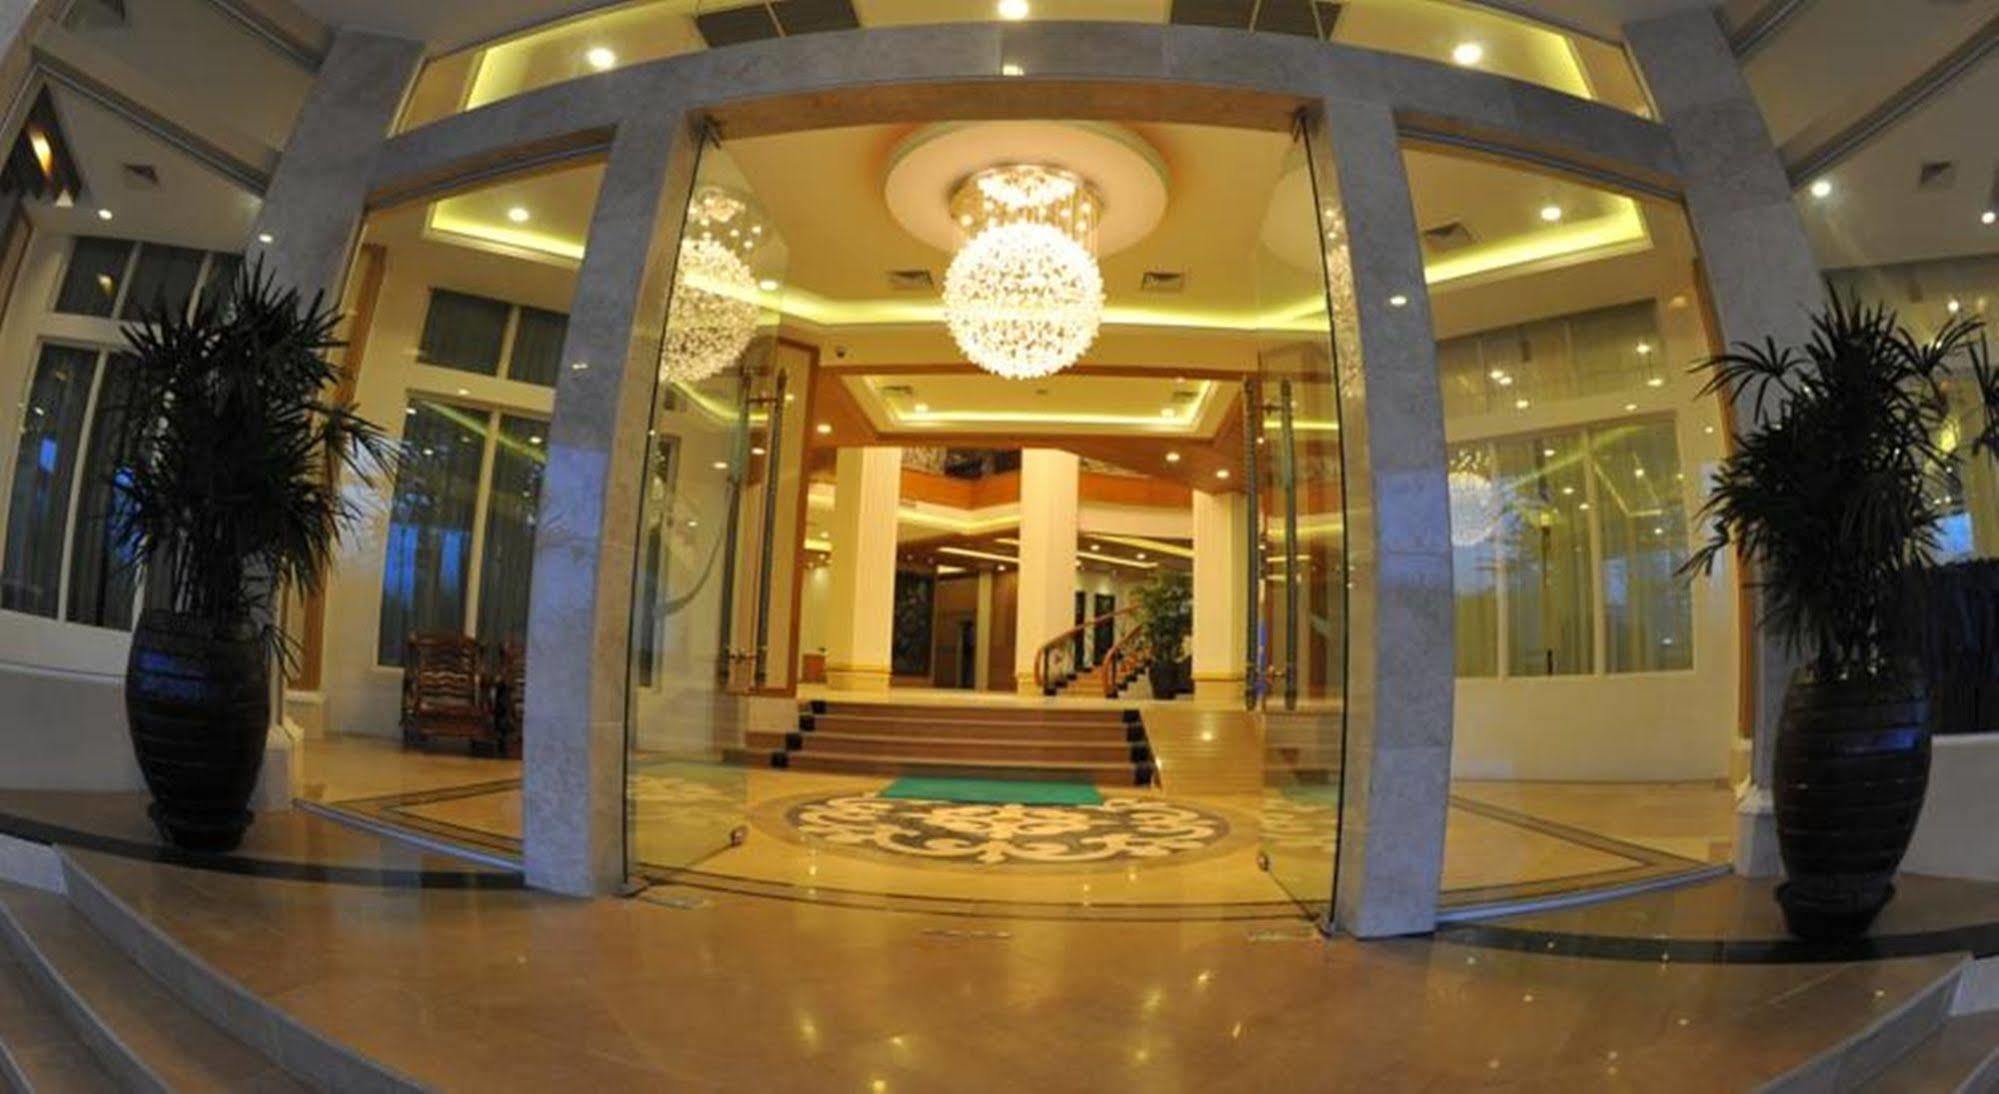 Hotel Hazel Mandalay Exterior foto